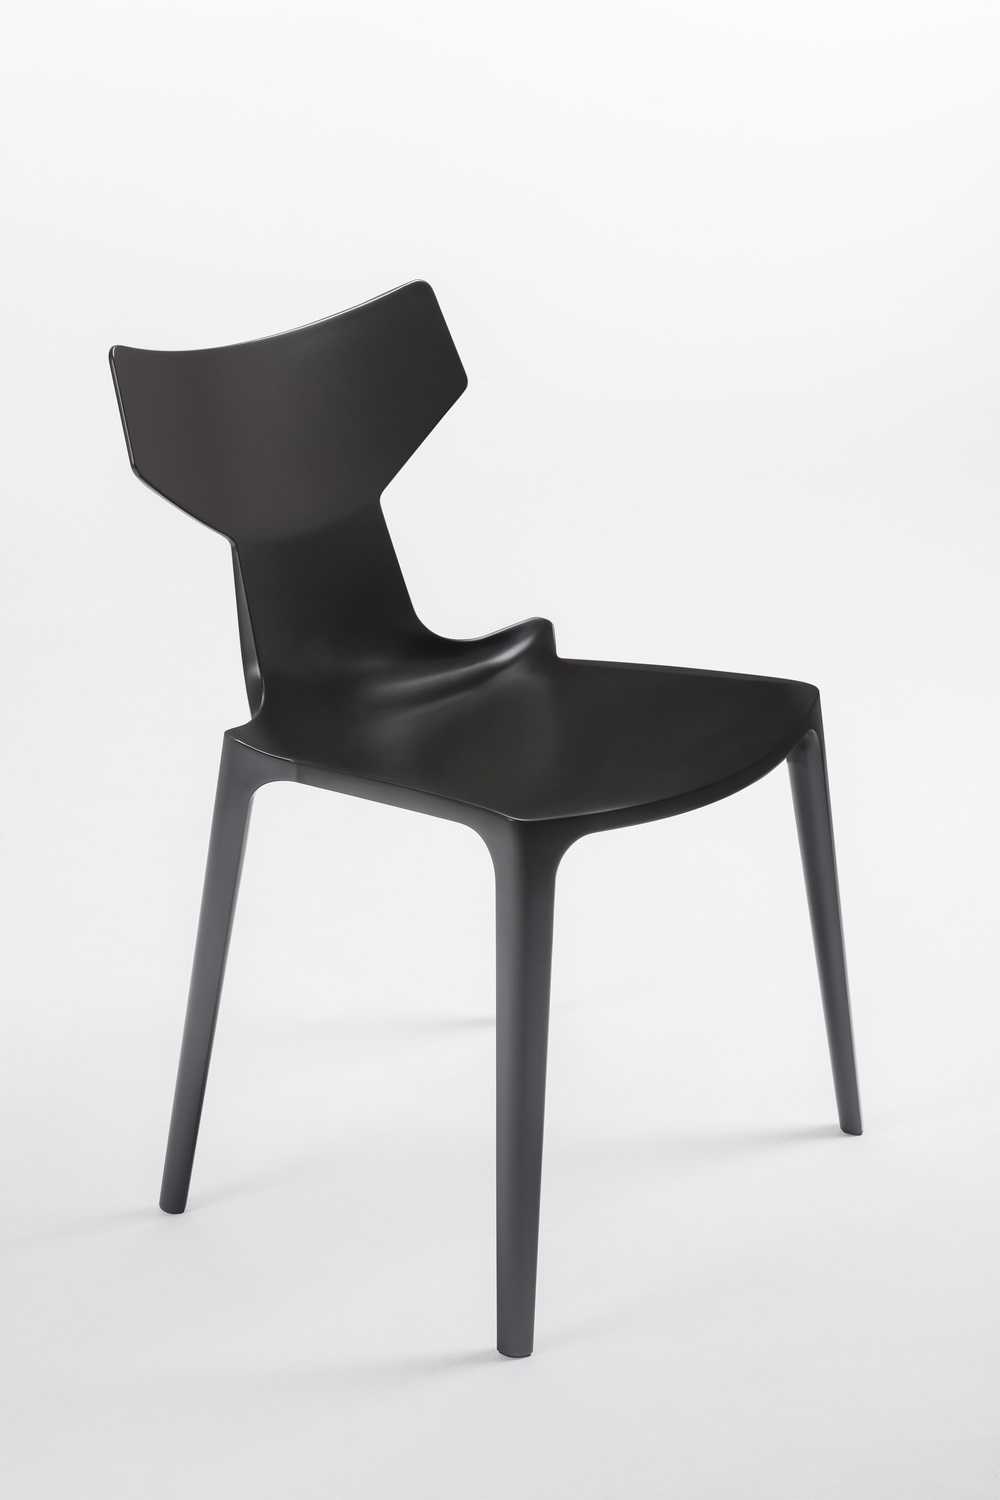 Re-Chair sedia illycaffè